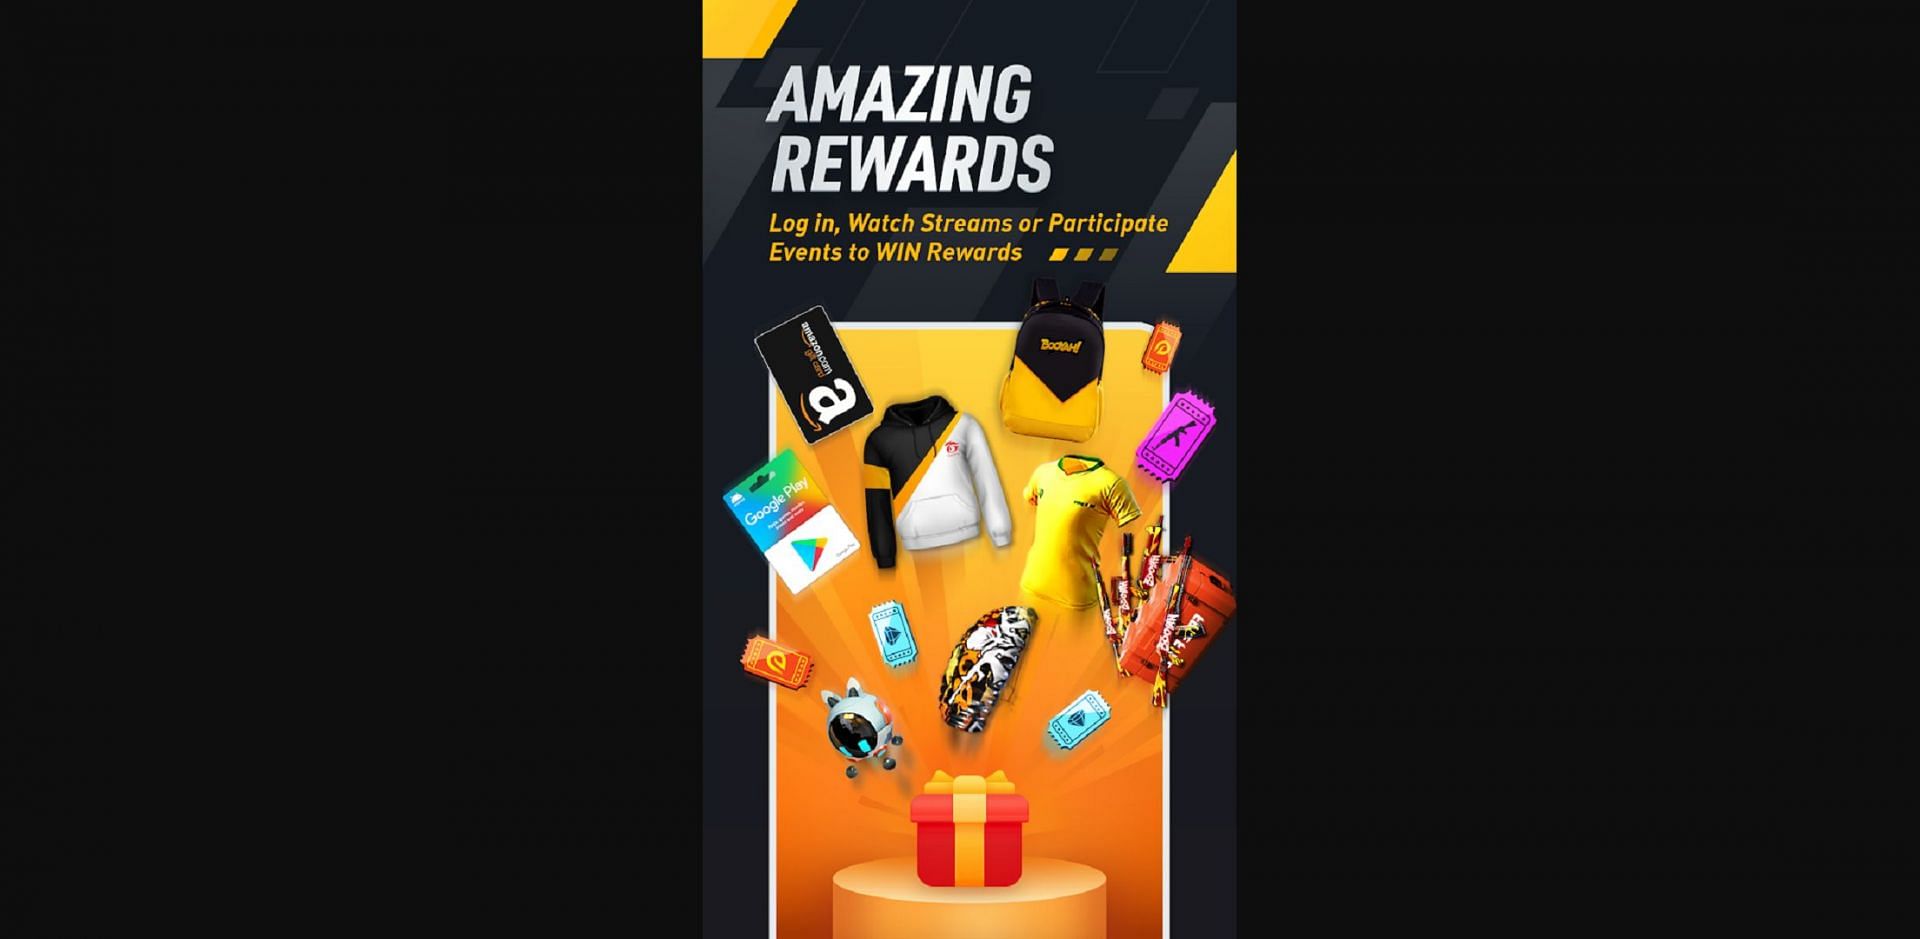 Booyah app offers attractive rewards (Image via Google Play Store)